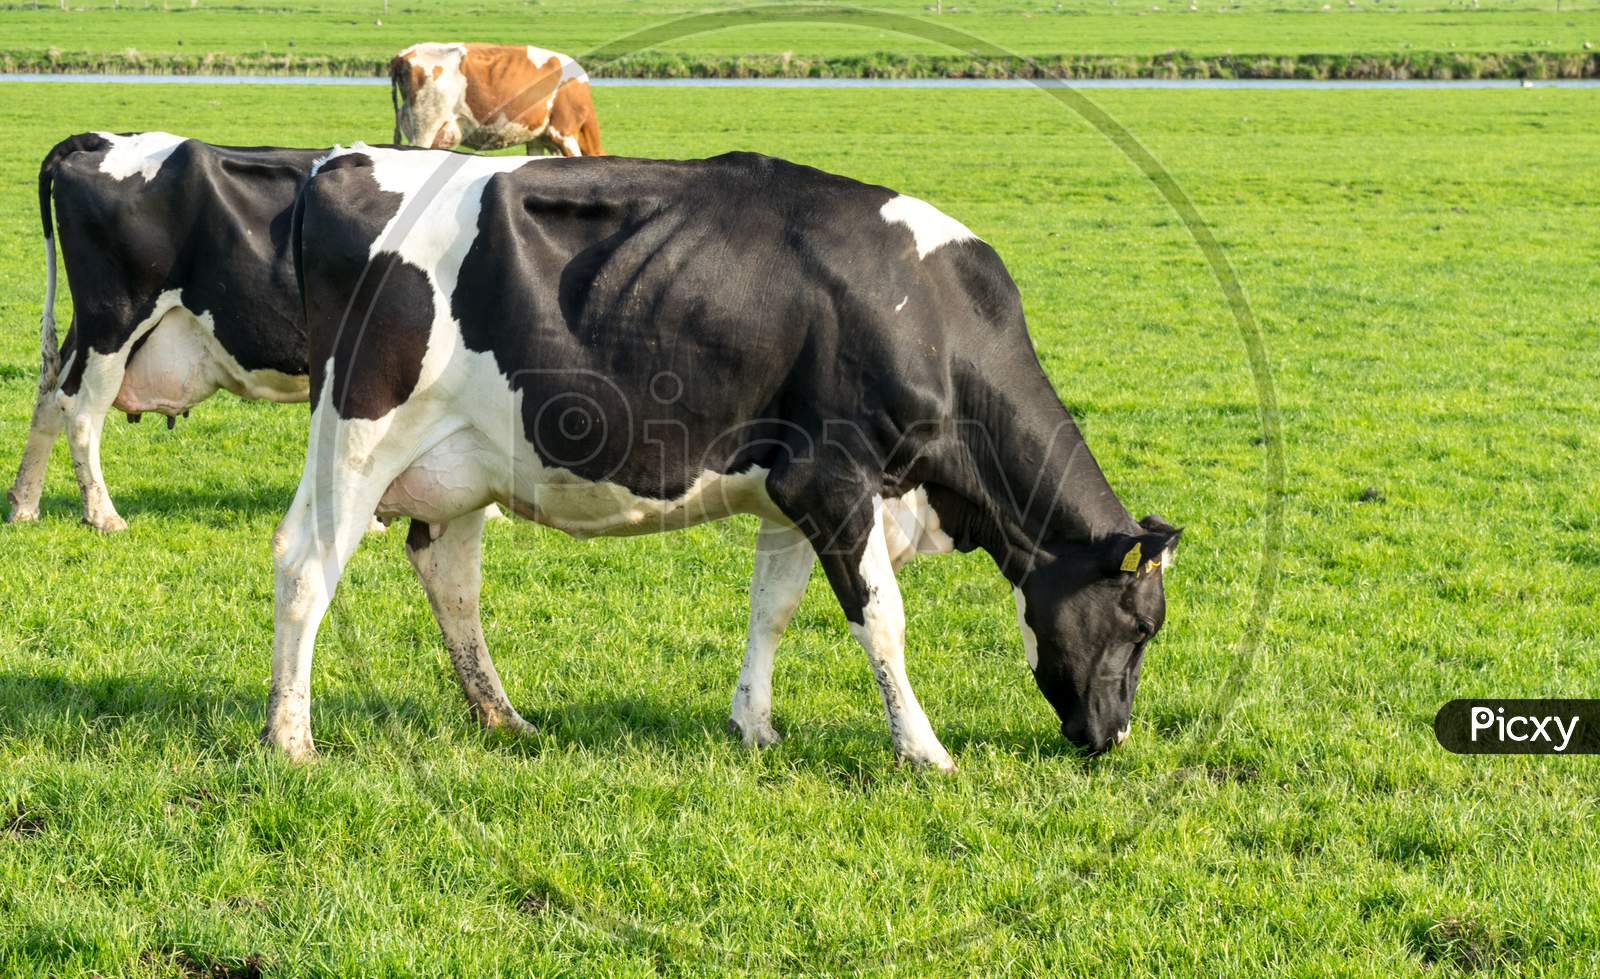 Netherlands,Wetlands,Maarken, Cows Grazing In A Field